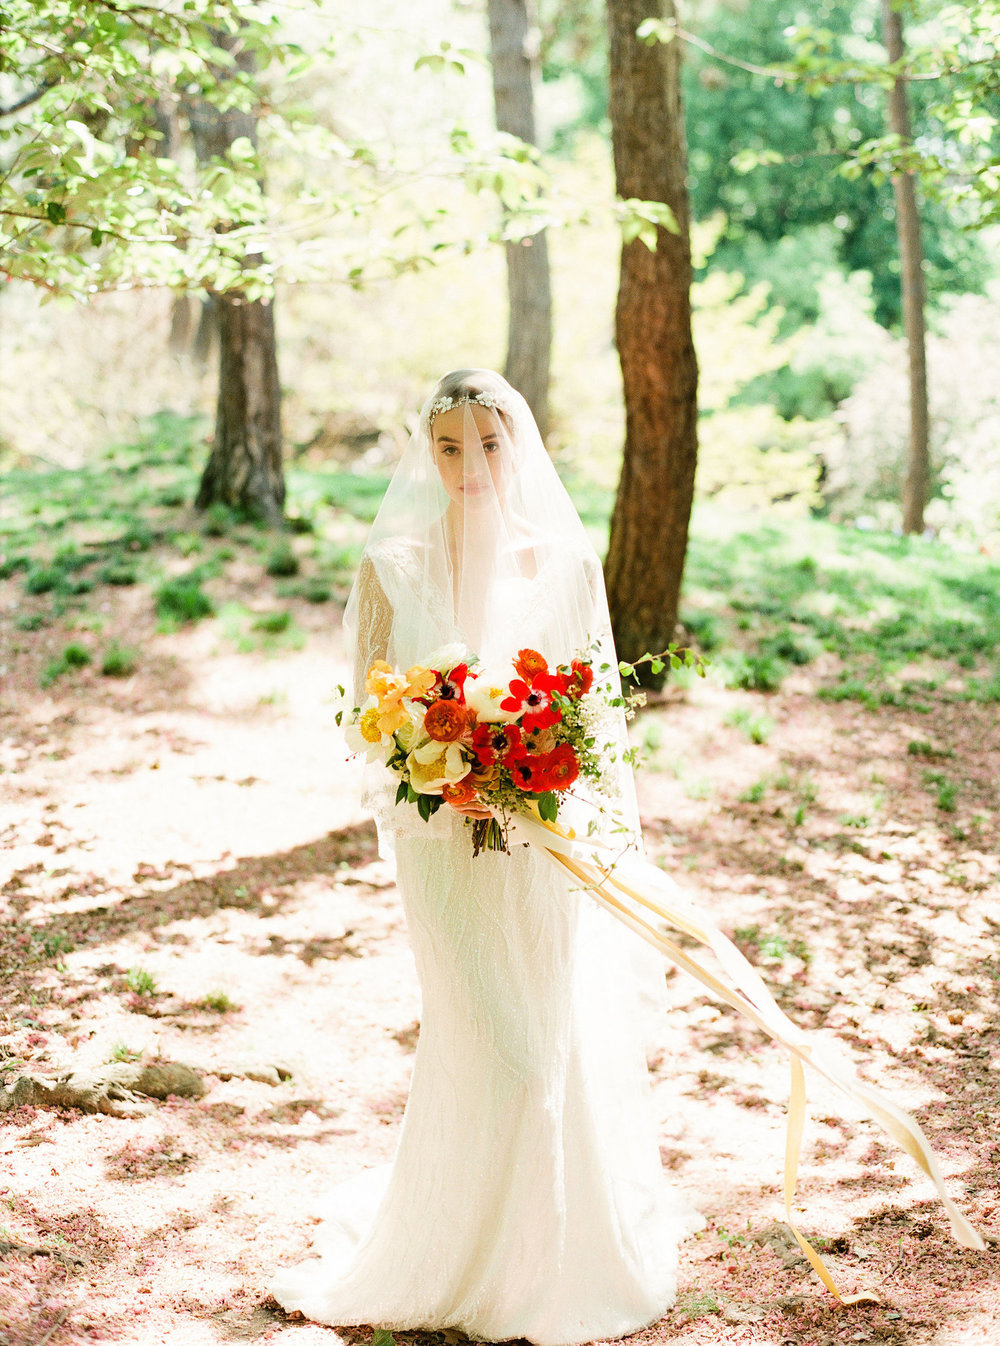 Morning Glow - Full Aperture Floral & Lindsay Madden Photography 17.jpeg